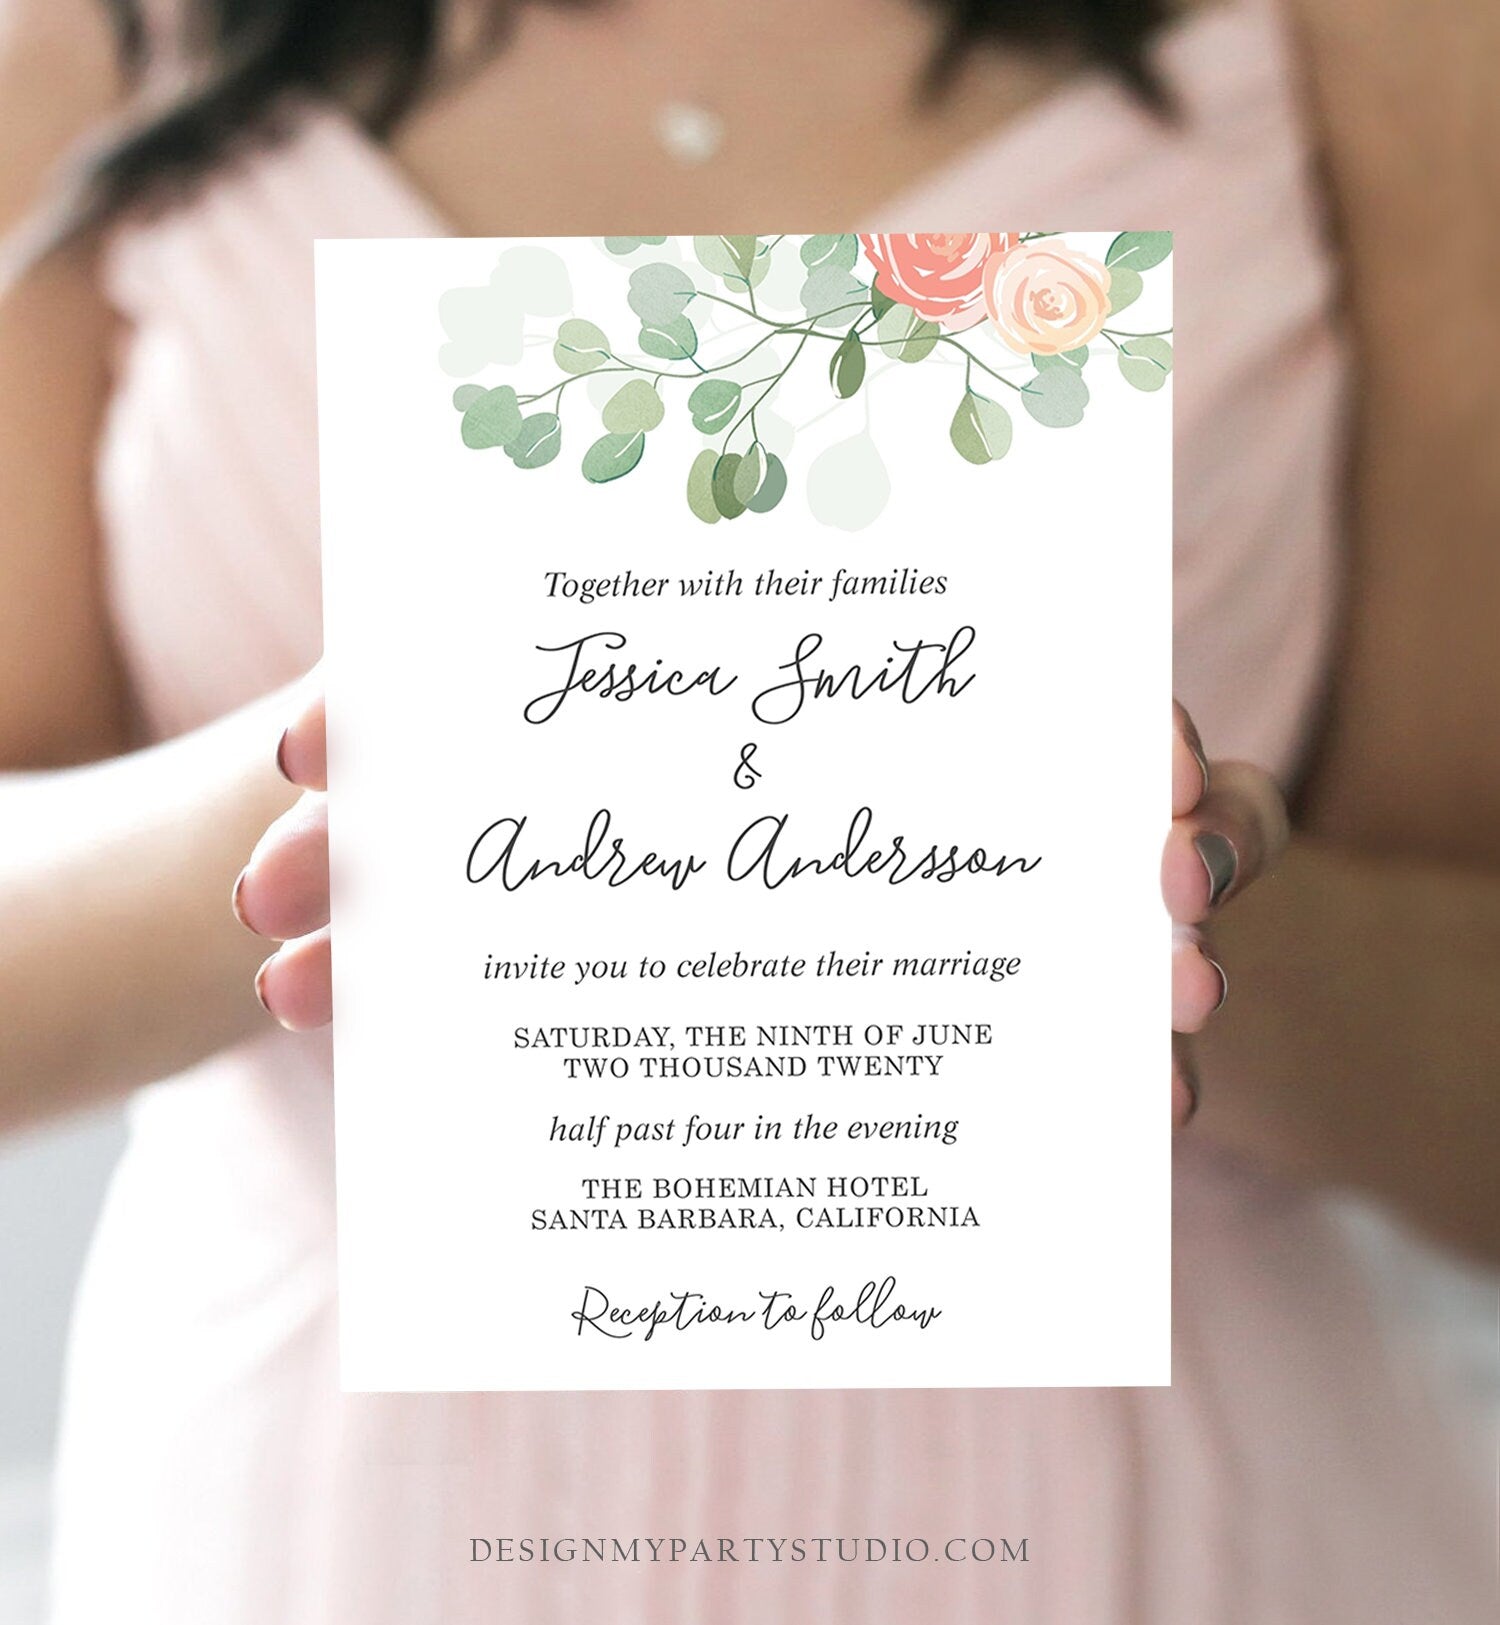 Editable Brunch and Bubbly Bridal Shower Invitation Eucalyptus Greenery Wedding Boho Invite Download Printable Template Digital Corjl 0029